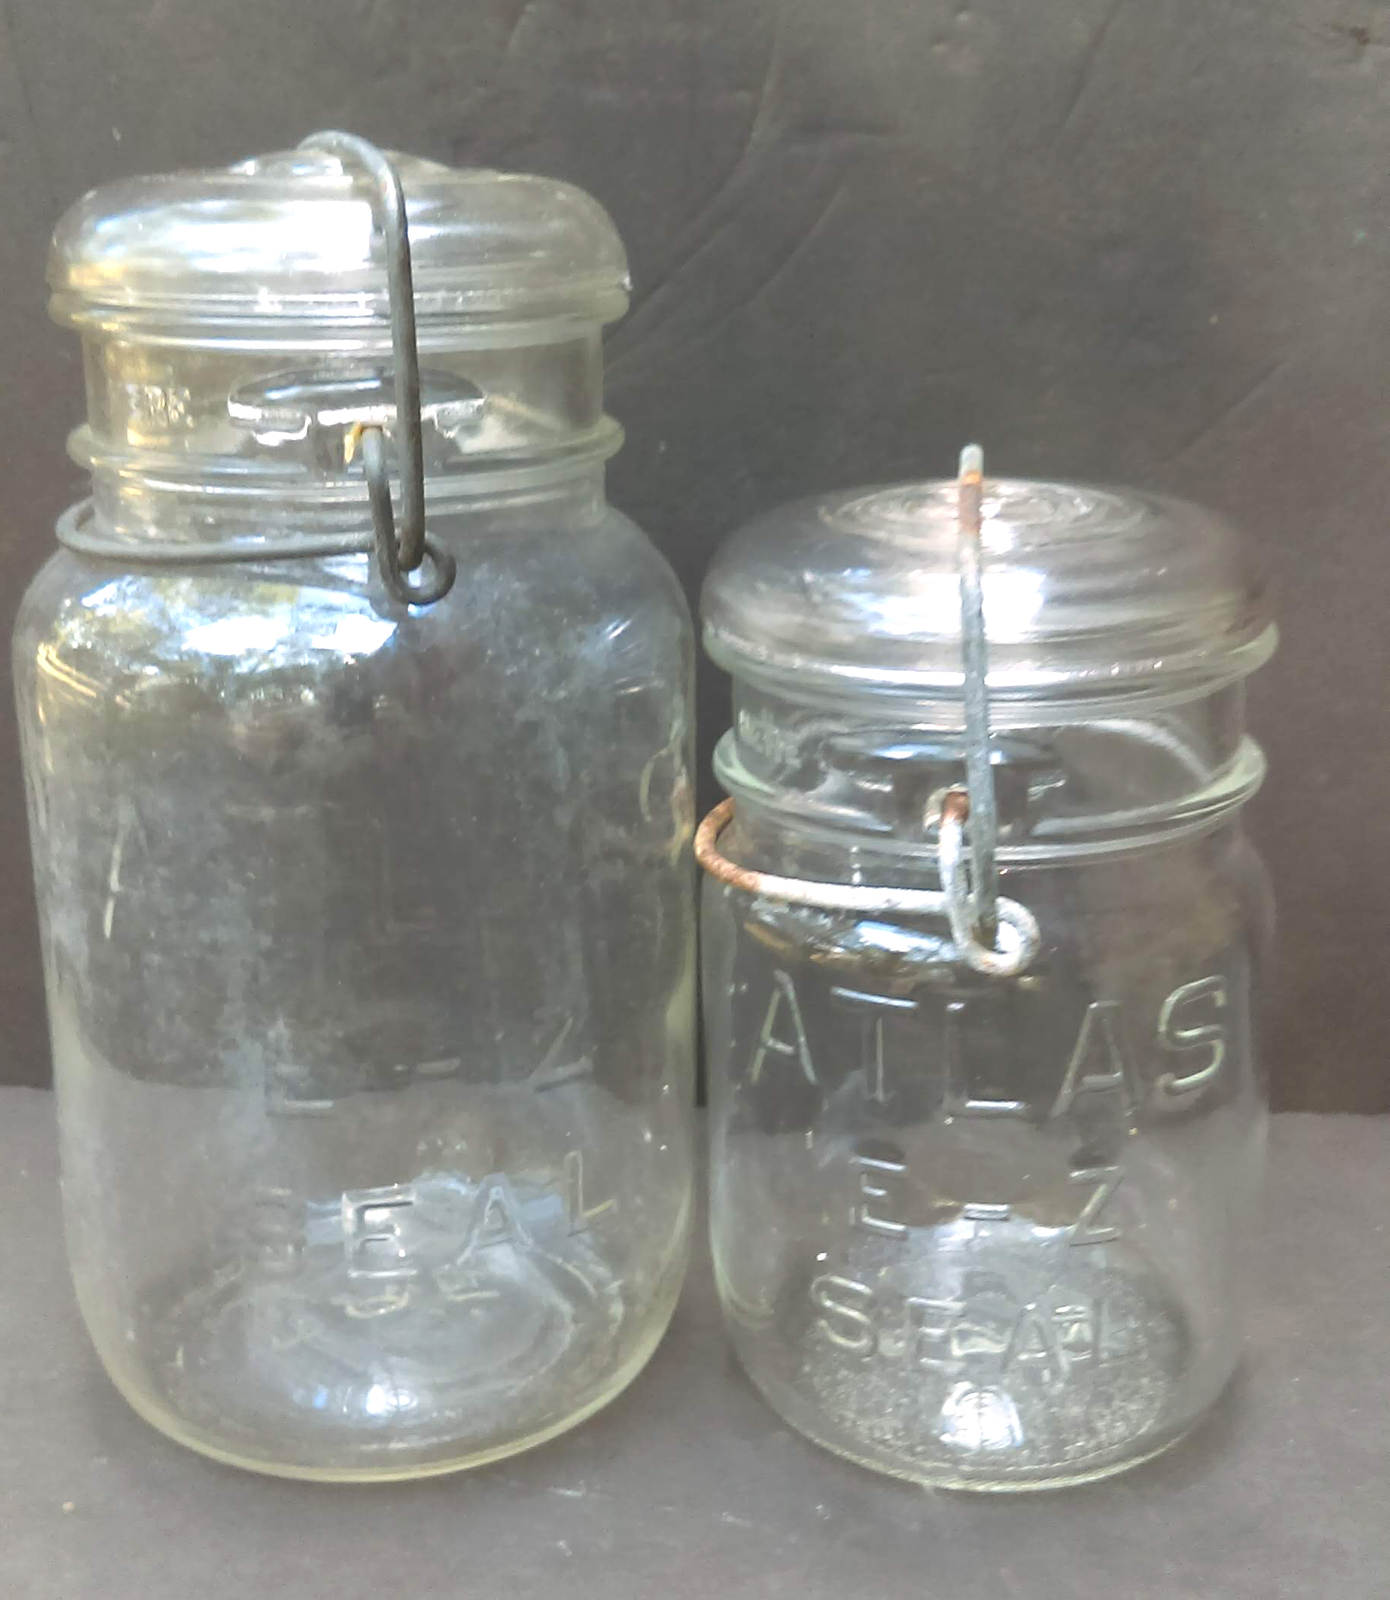 Real Vintage Clear Glass Mason Jars without Lids / Atlas Strong Shoulder  Mason & Lamb Mason Large Jars / Antique Quart-Sized Mason Jars